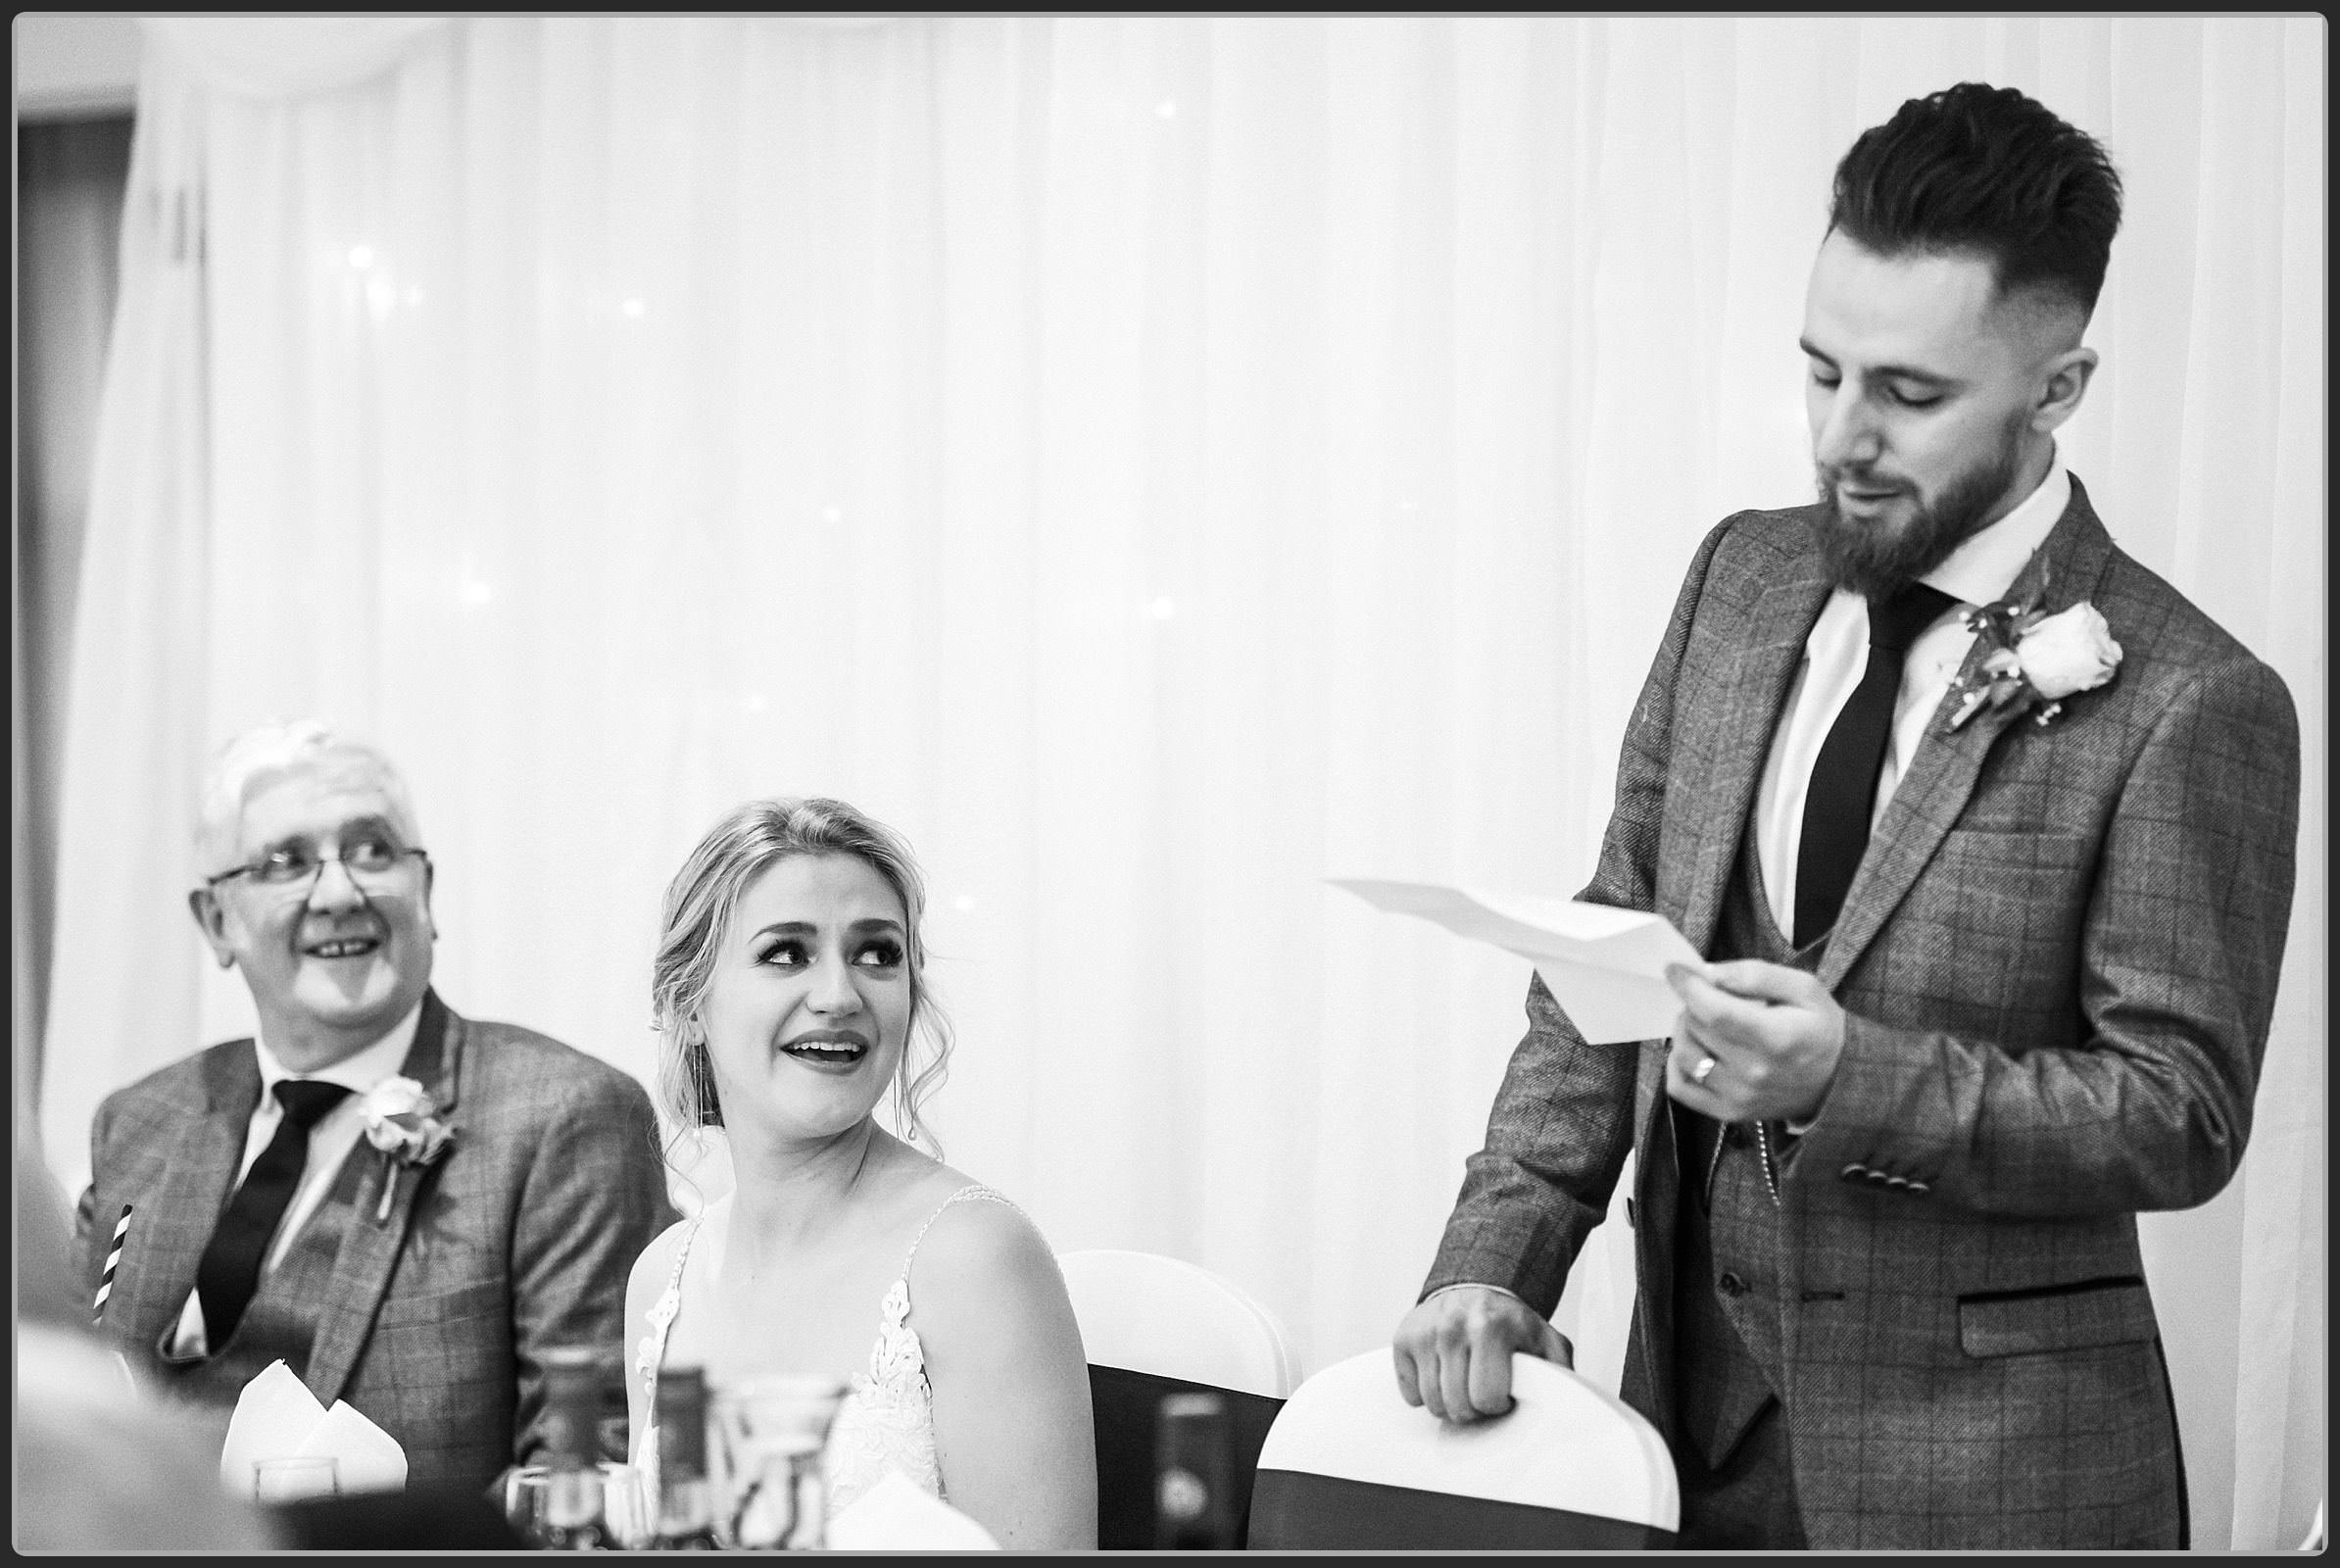 Wedding speeches